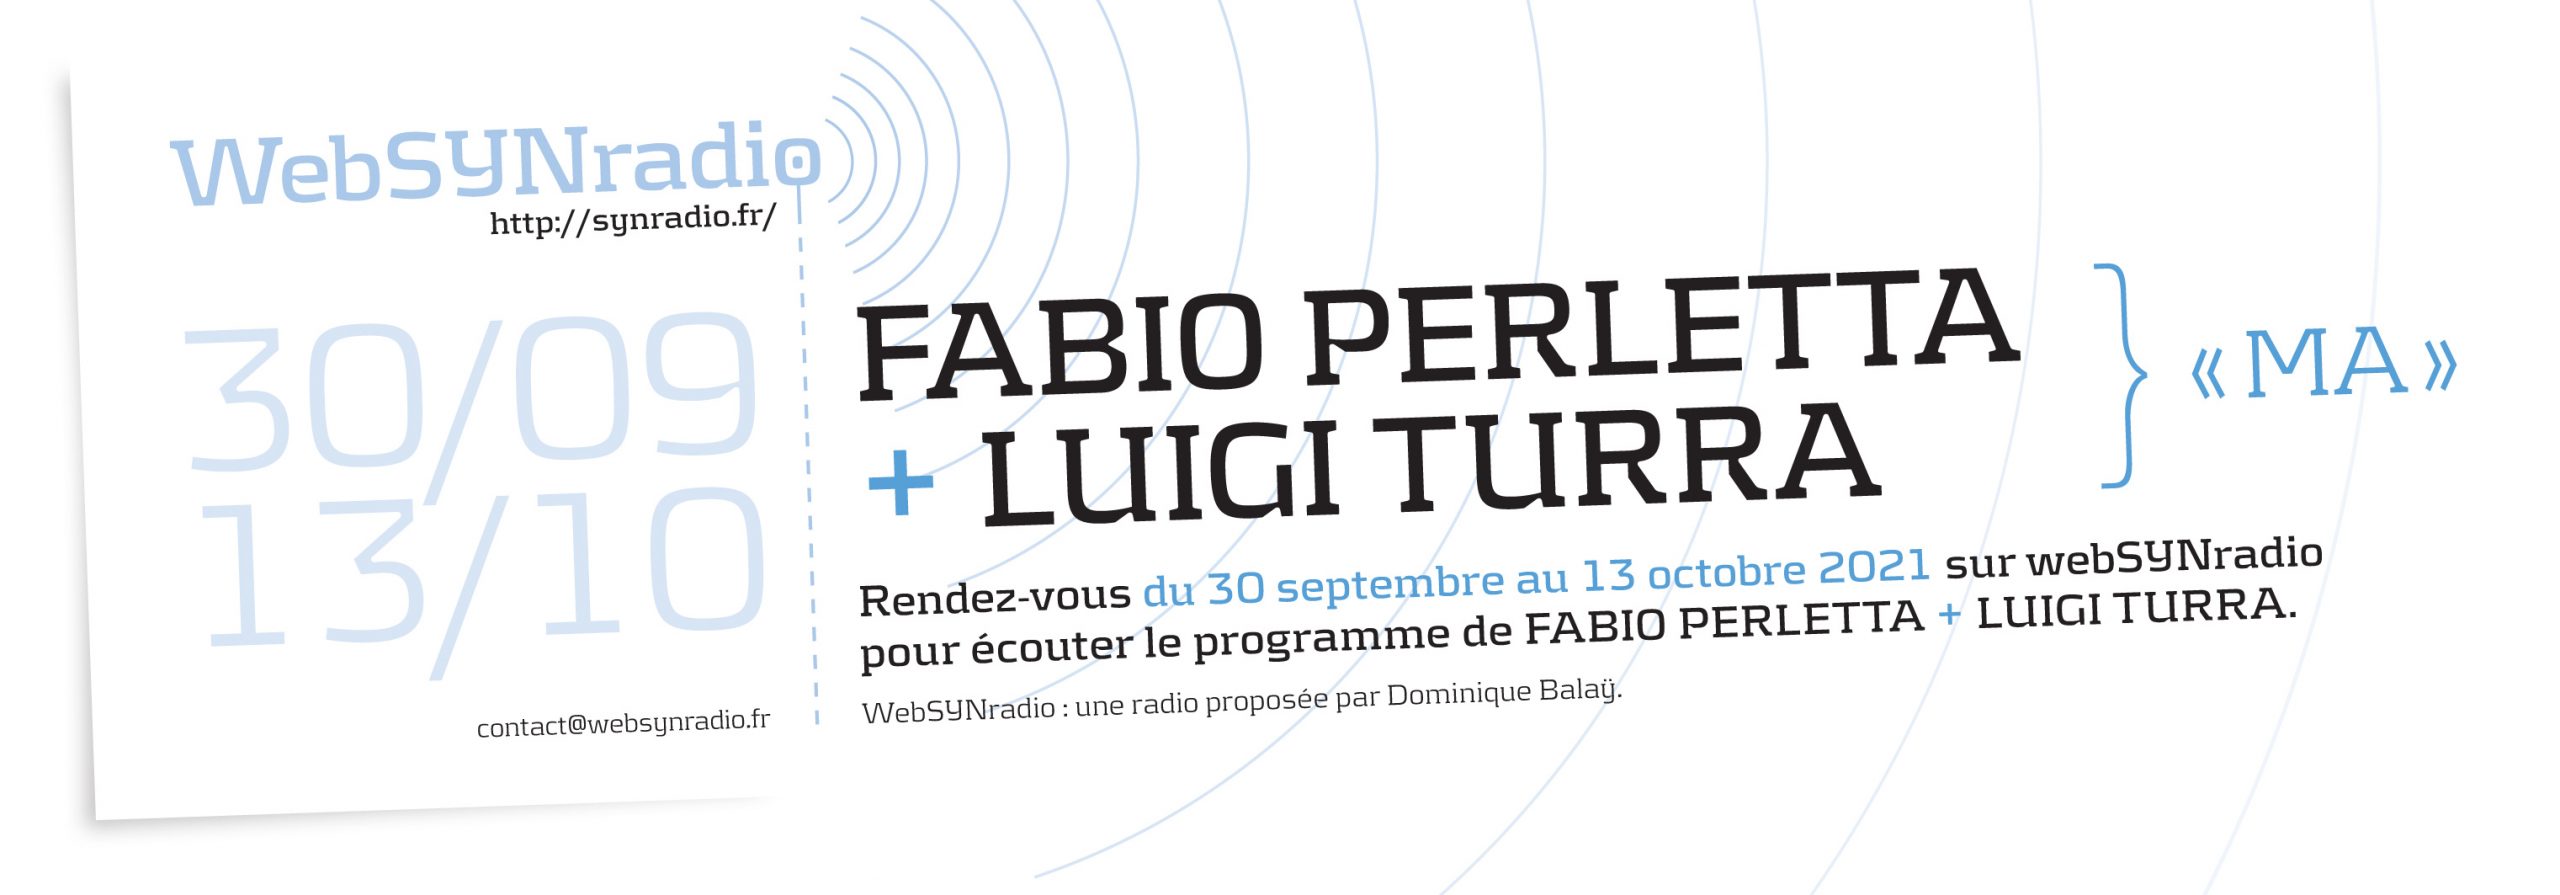 webSYNradio-flyer-299-Fabio-Perletta-+-Luigi-Turra